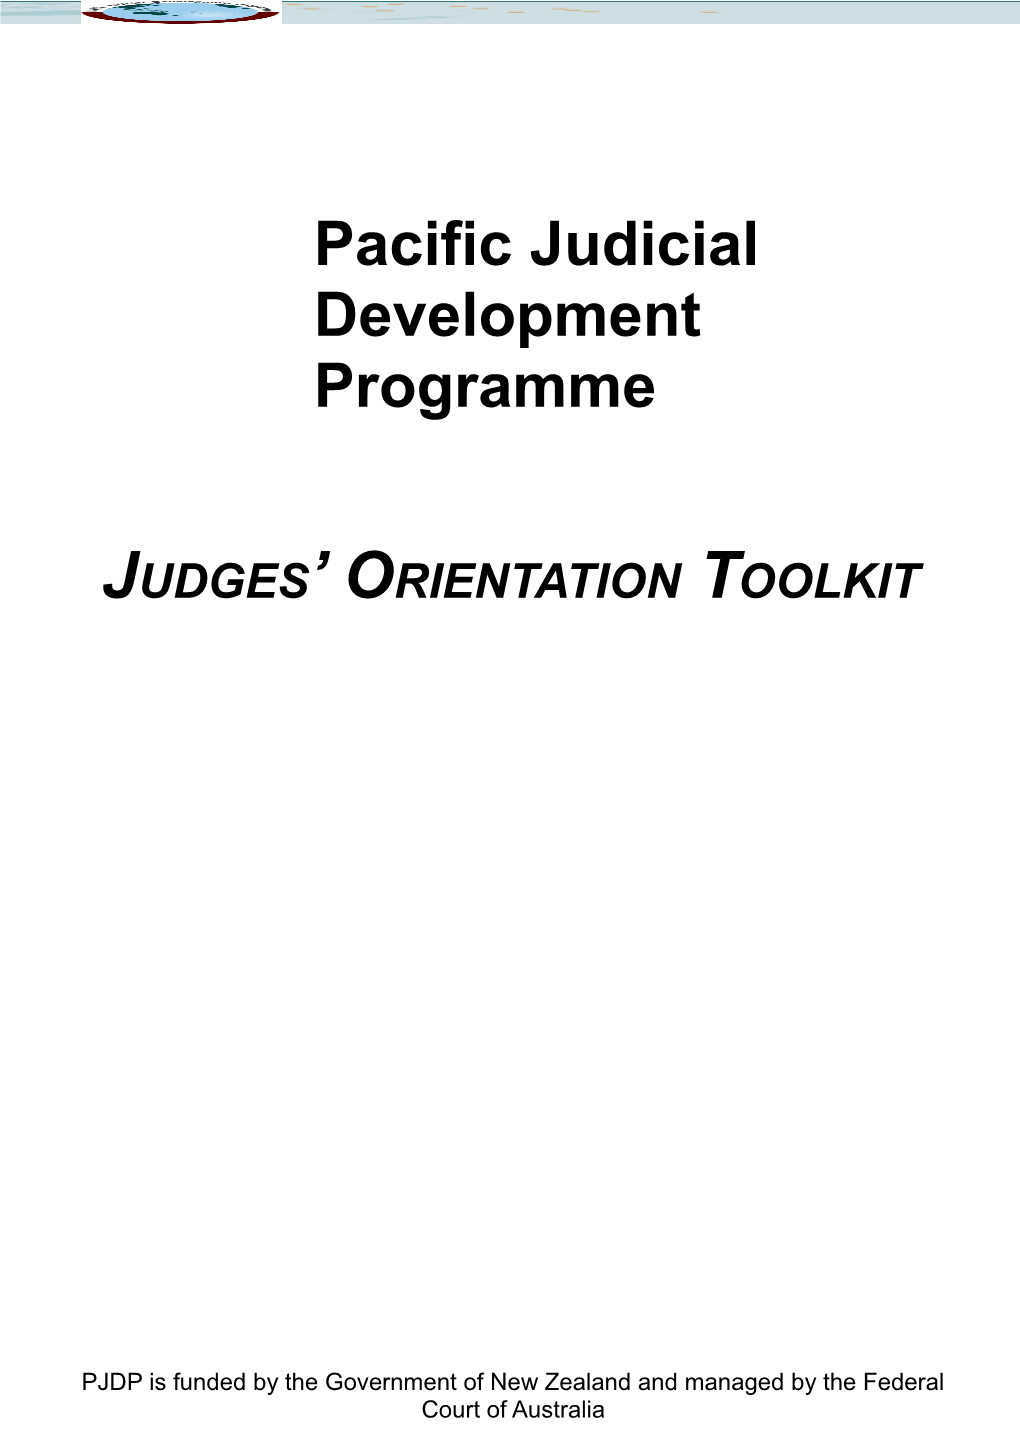 Judges' Orientation Toolkit s1